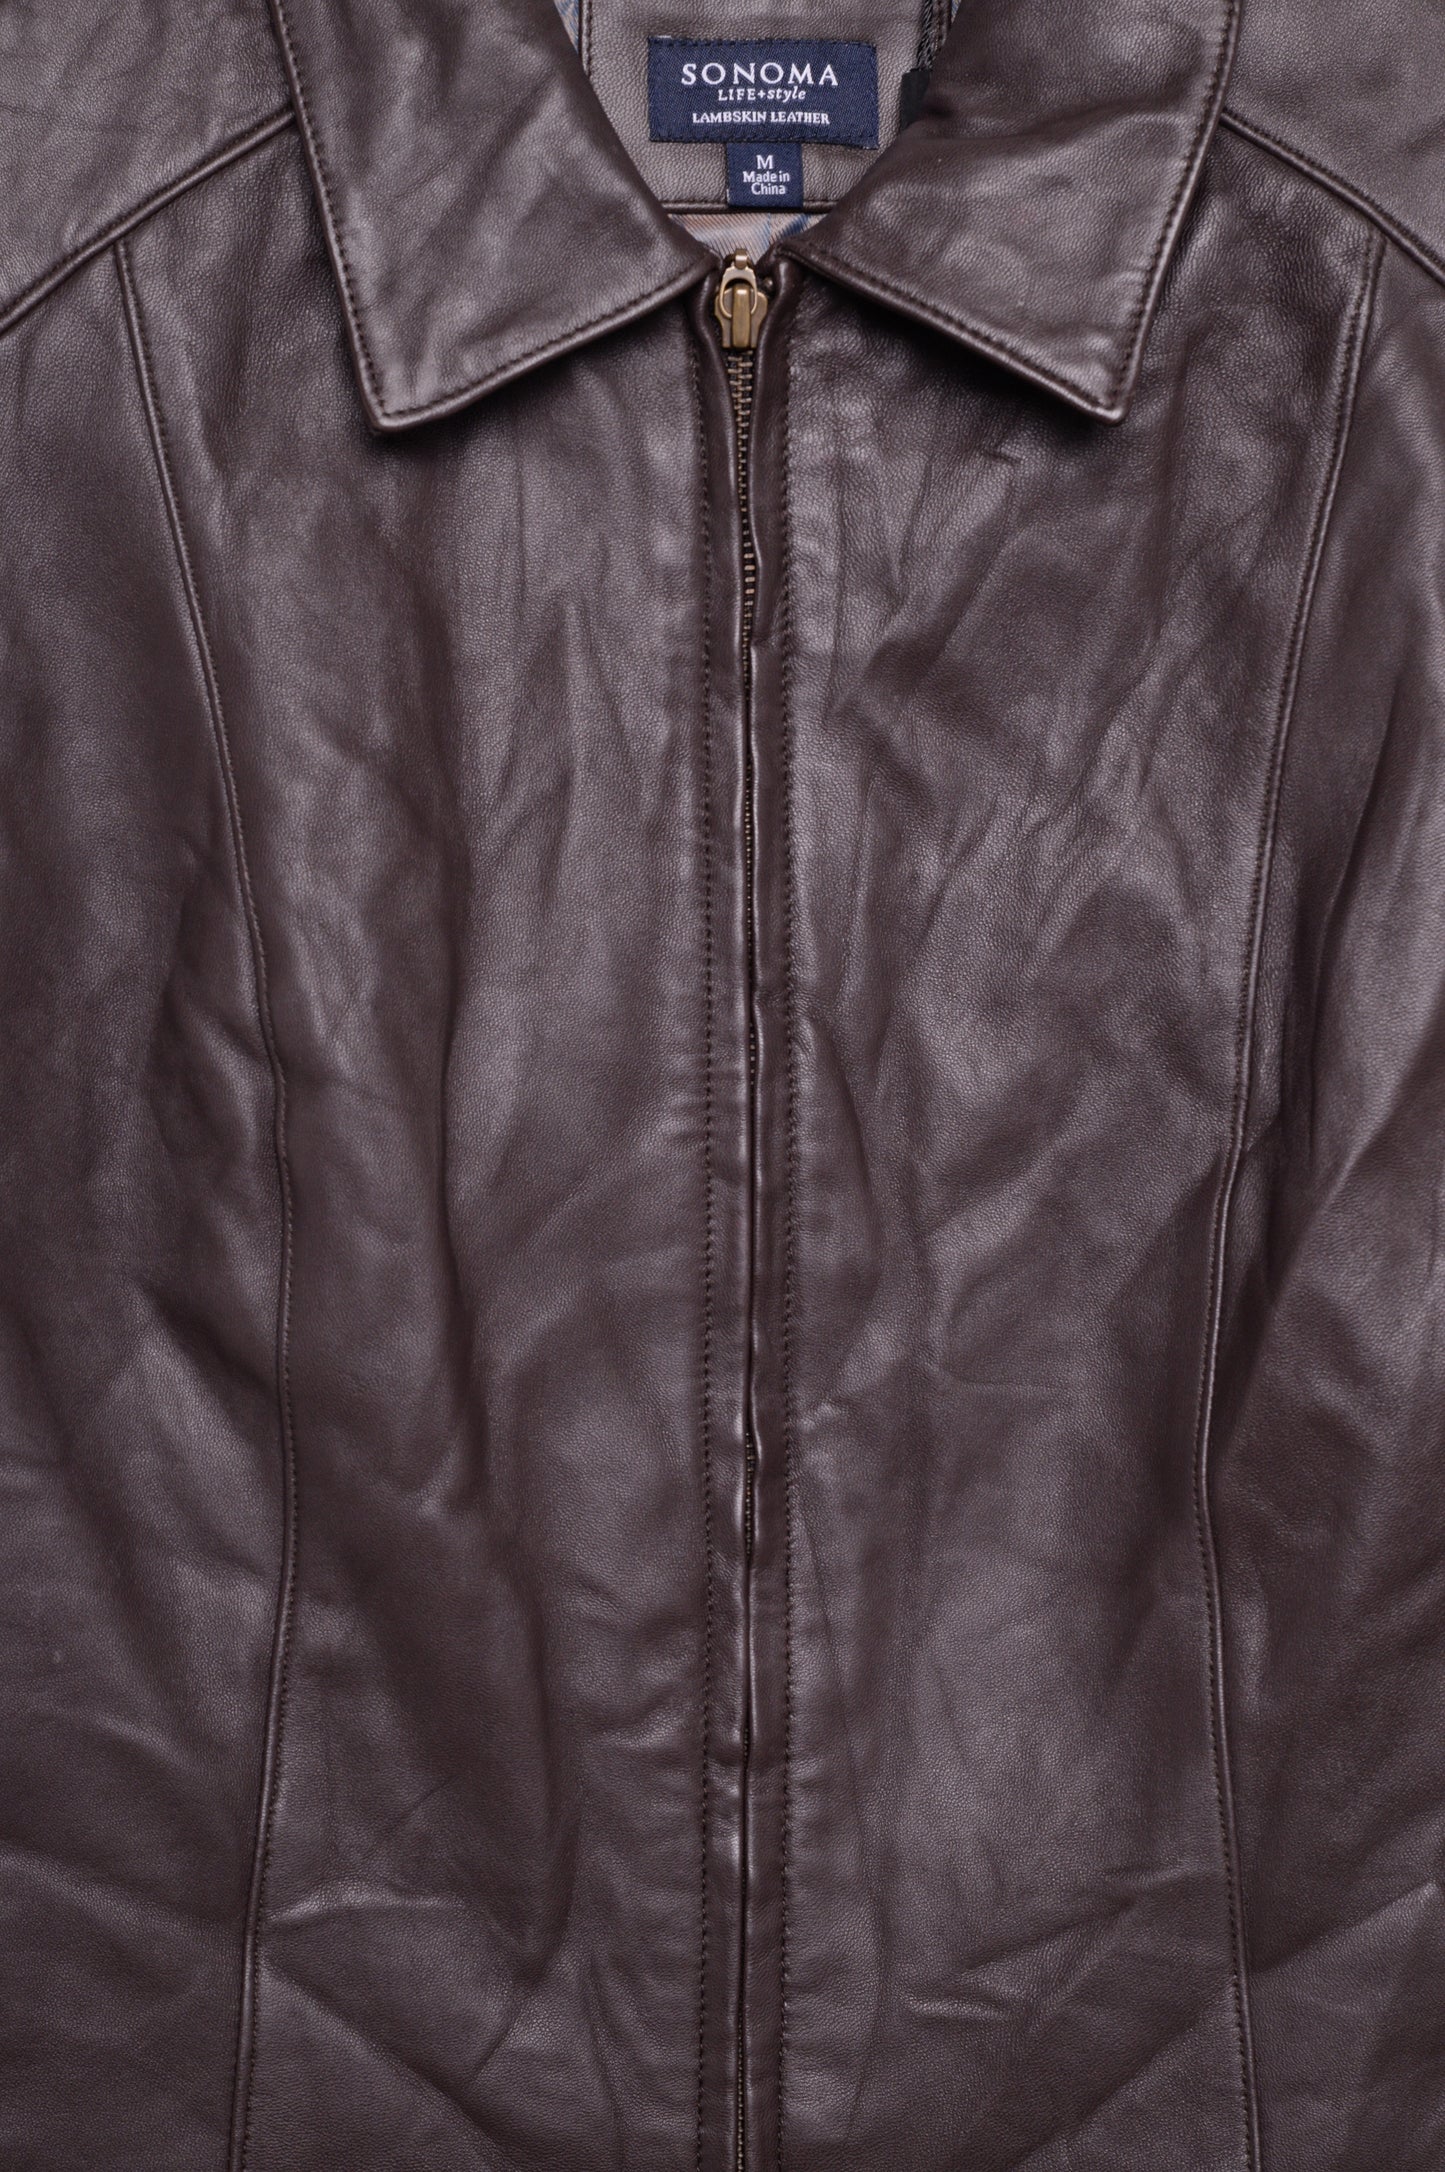 1990s Soft Lambskin Leather Jacket